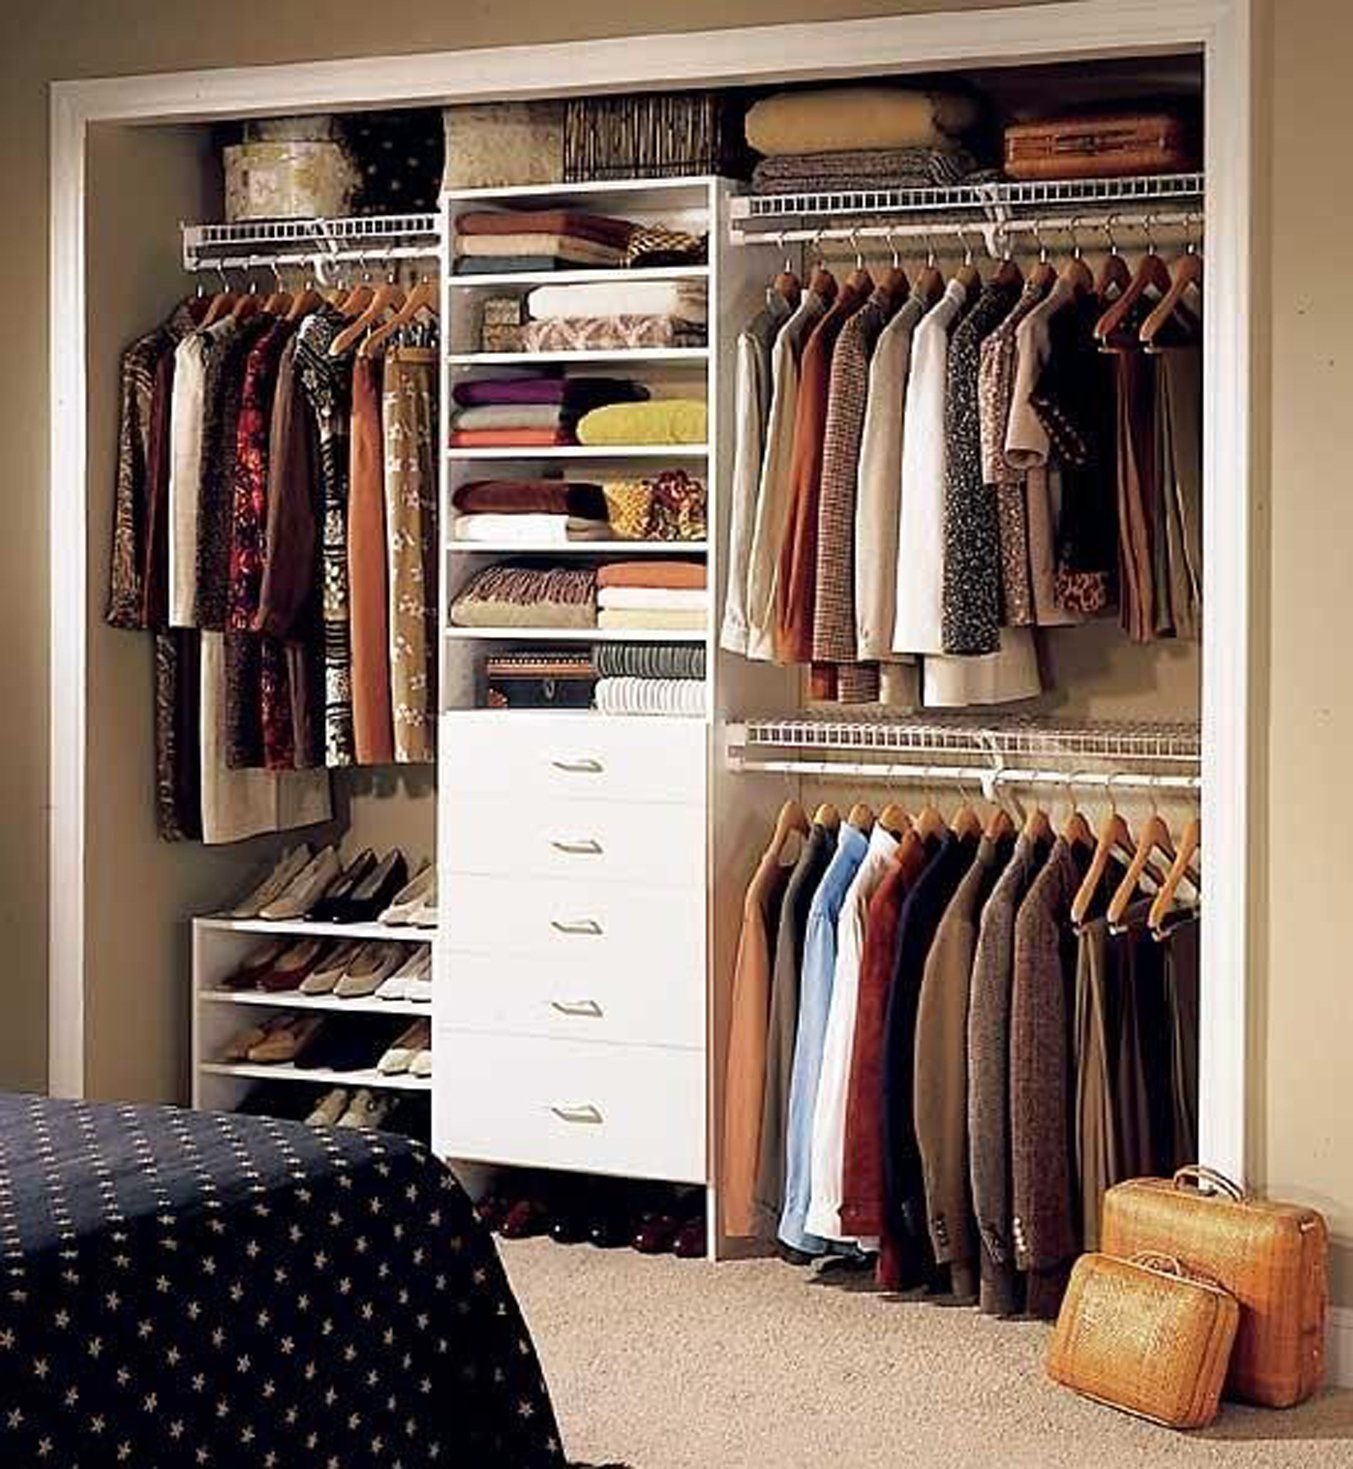 Шкафы идеи дизайна. Наполнение гардеробной комнаты. Гардеробные шкафы. Идеи для гардеробной. Идеи гардеробной комнаты.